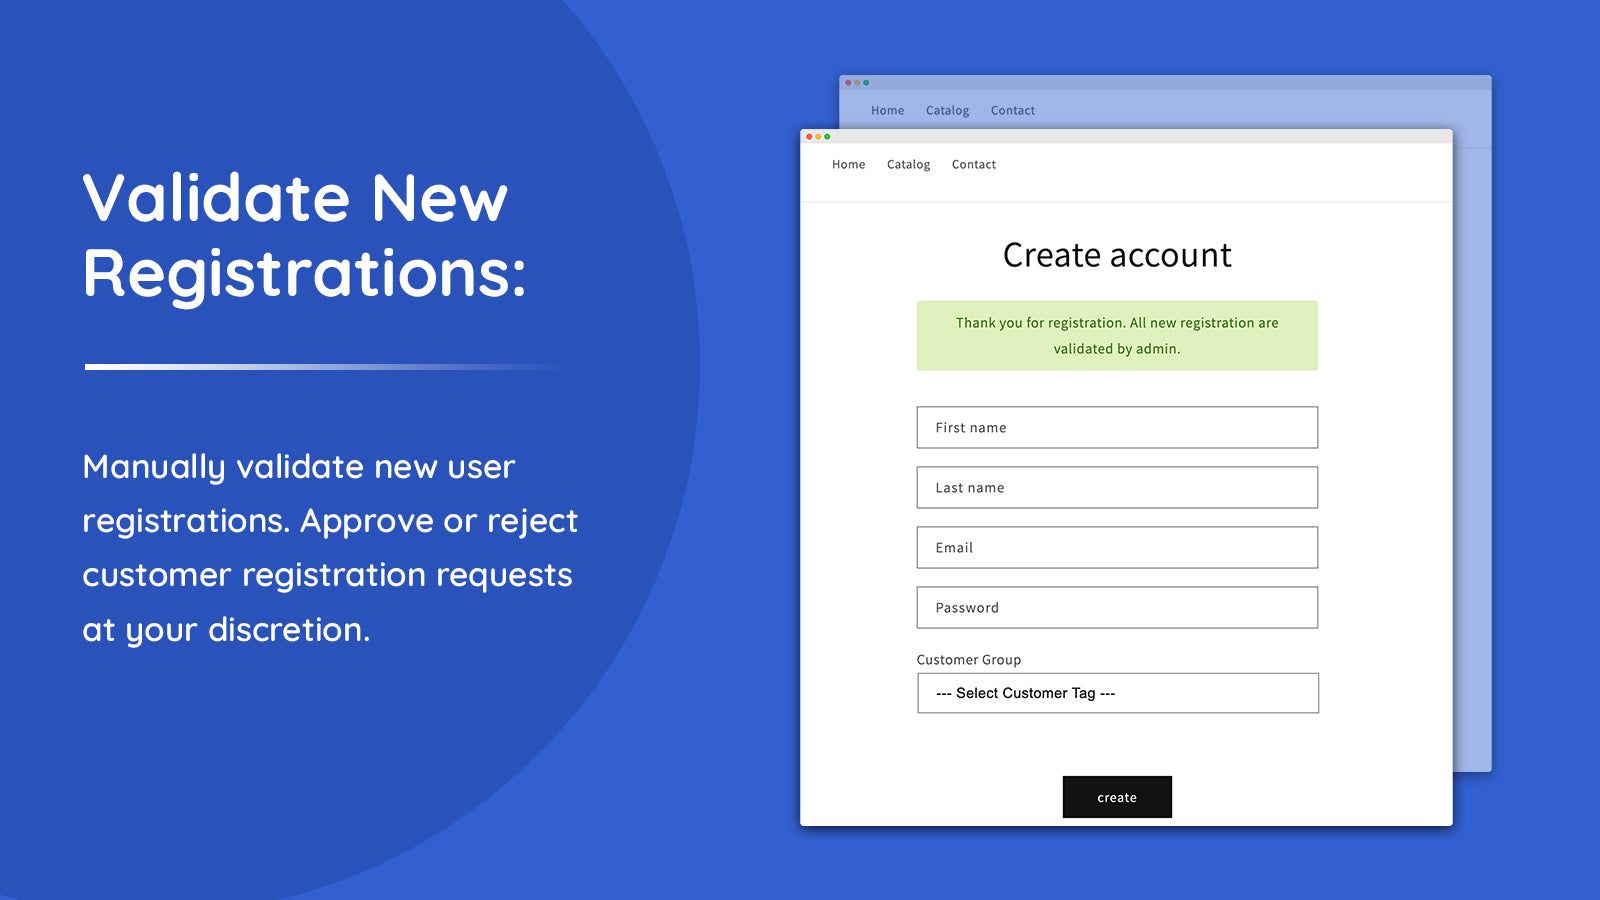 Manually validate new user registrations